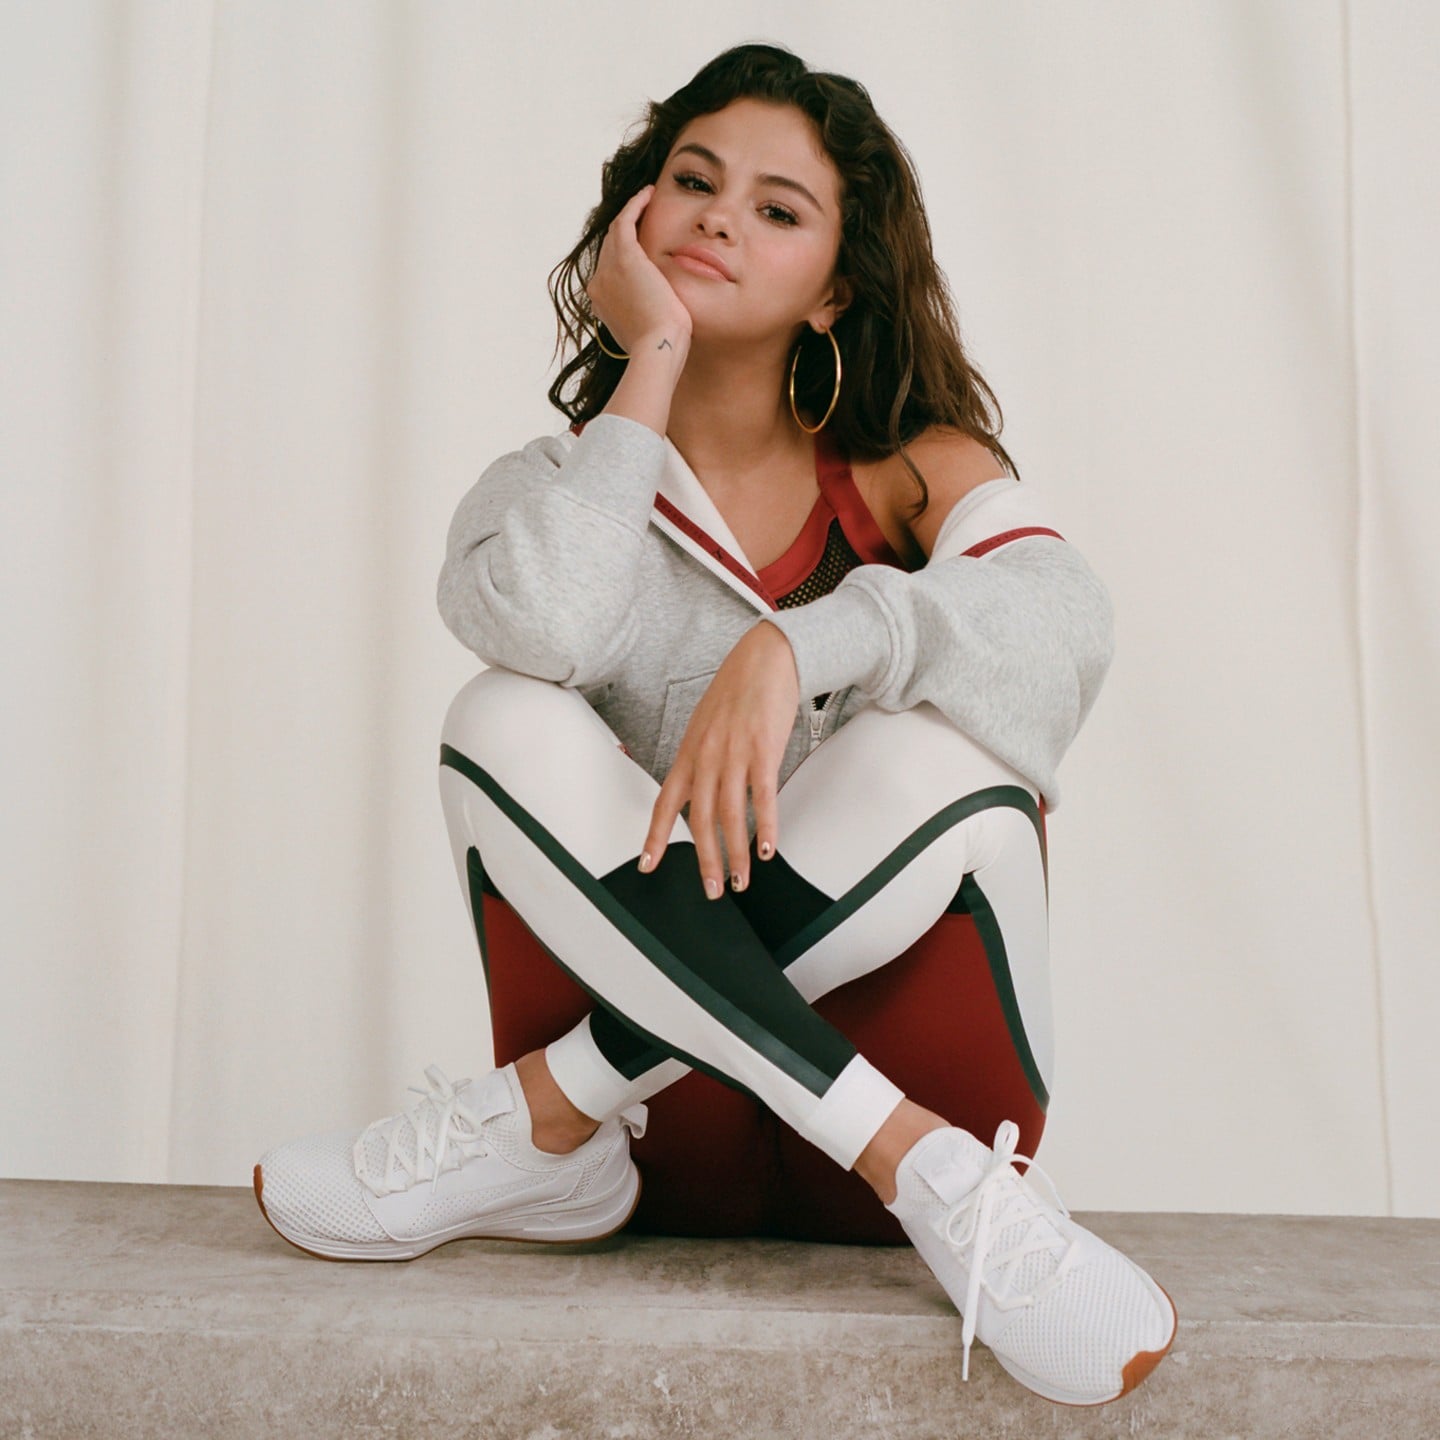 Excellent play irony Selena Gomez Puma Collection 2018 | POPSUGAR Fashion